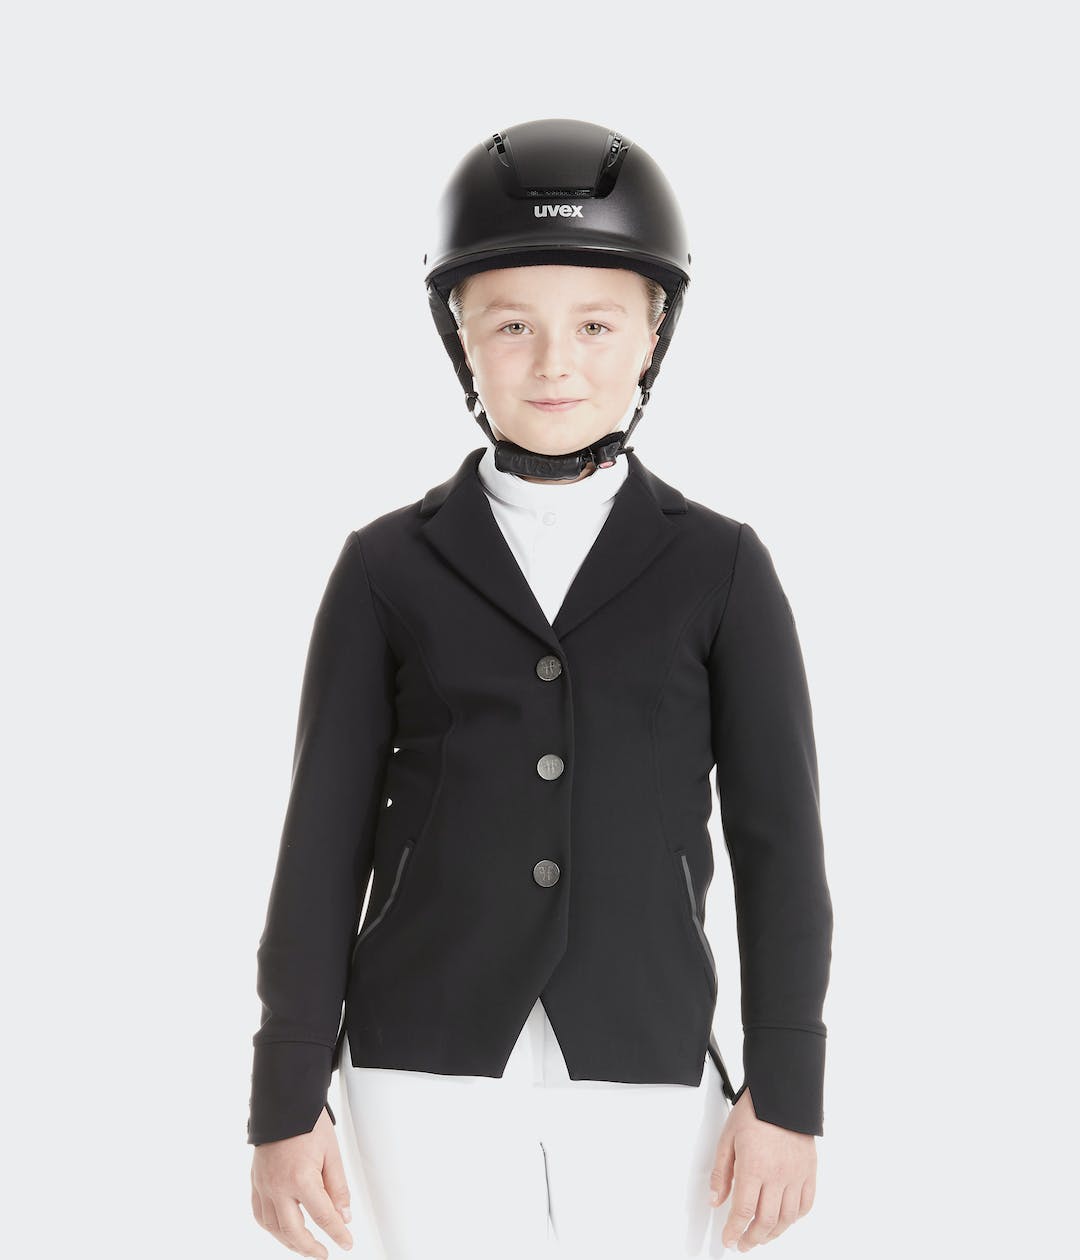 Horse Pilot Youth AeroTech Show Jacket - Black